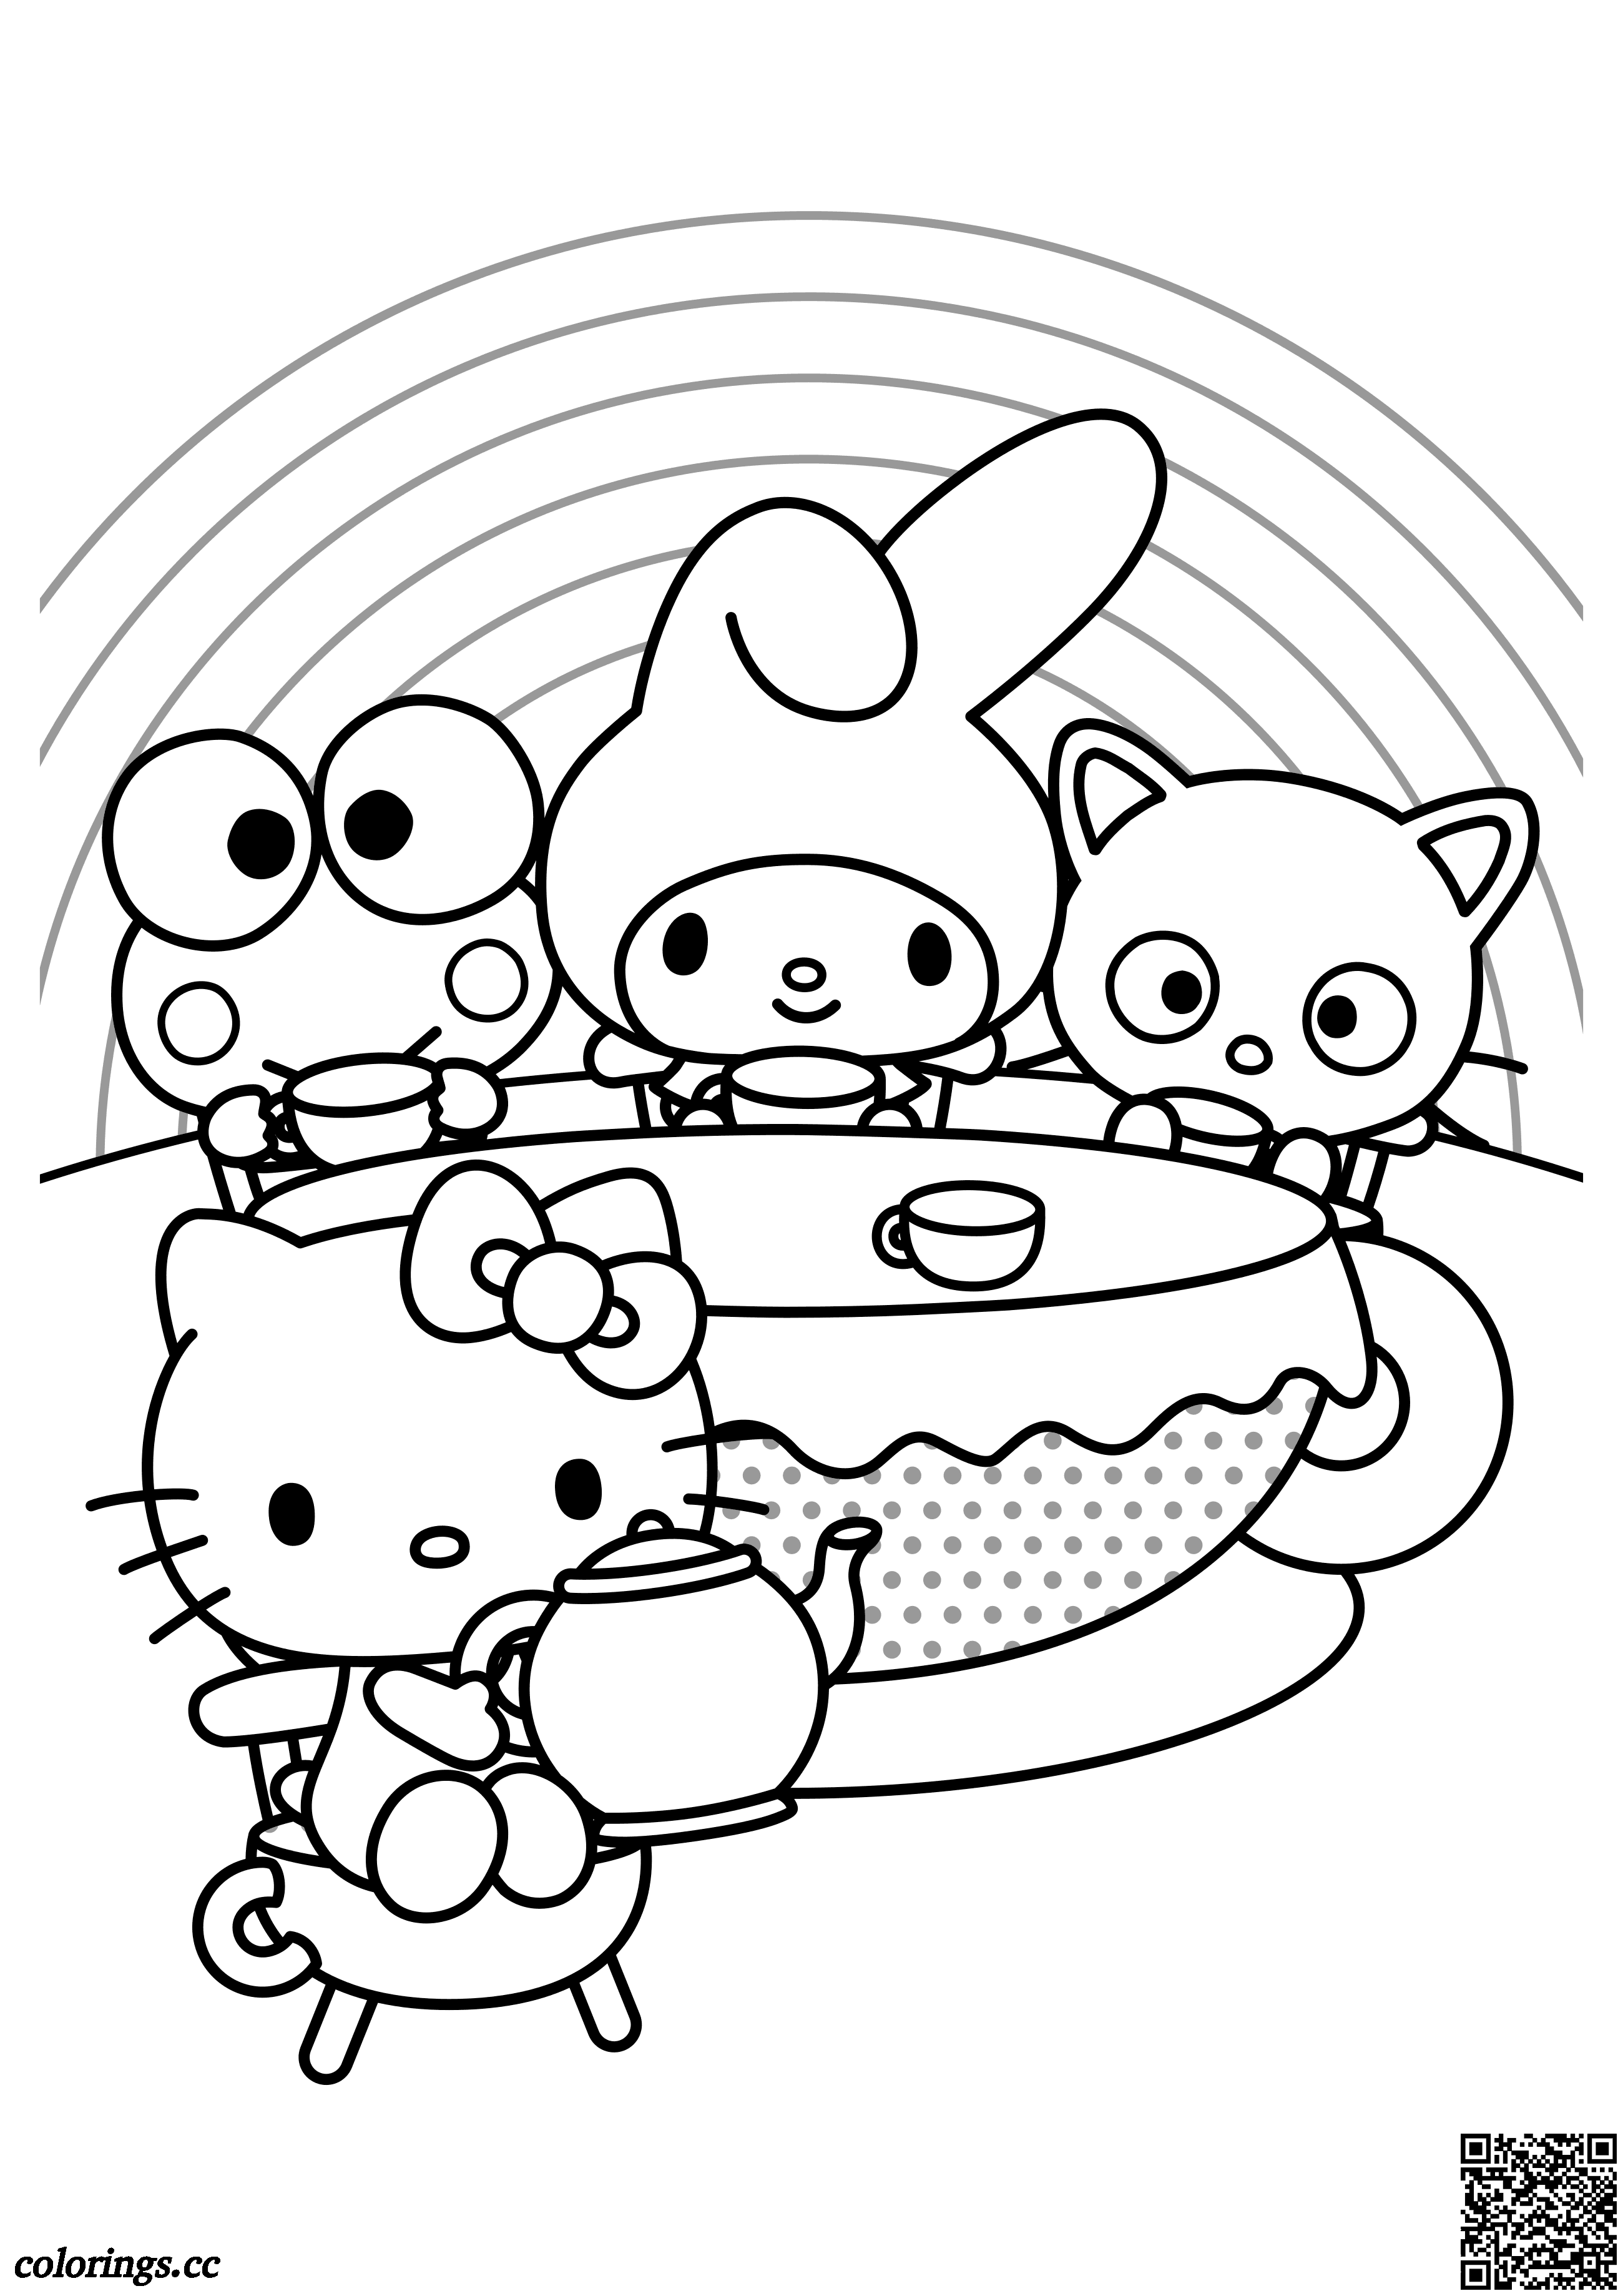 Hello Kitty, Keroppi, My Melody y Chococat libro de colorear, Hola